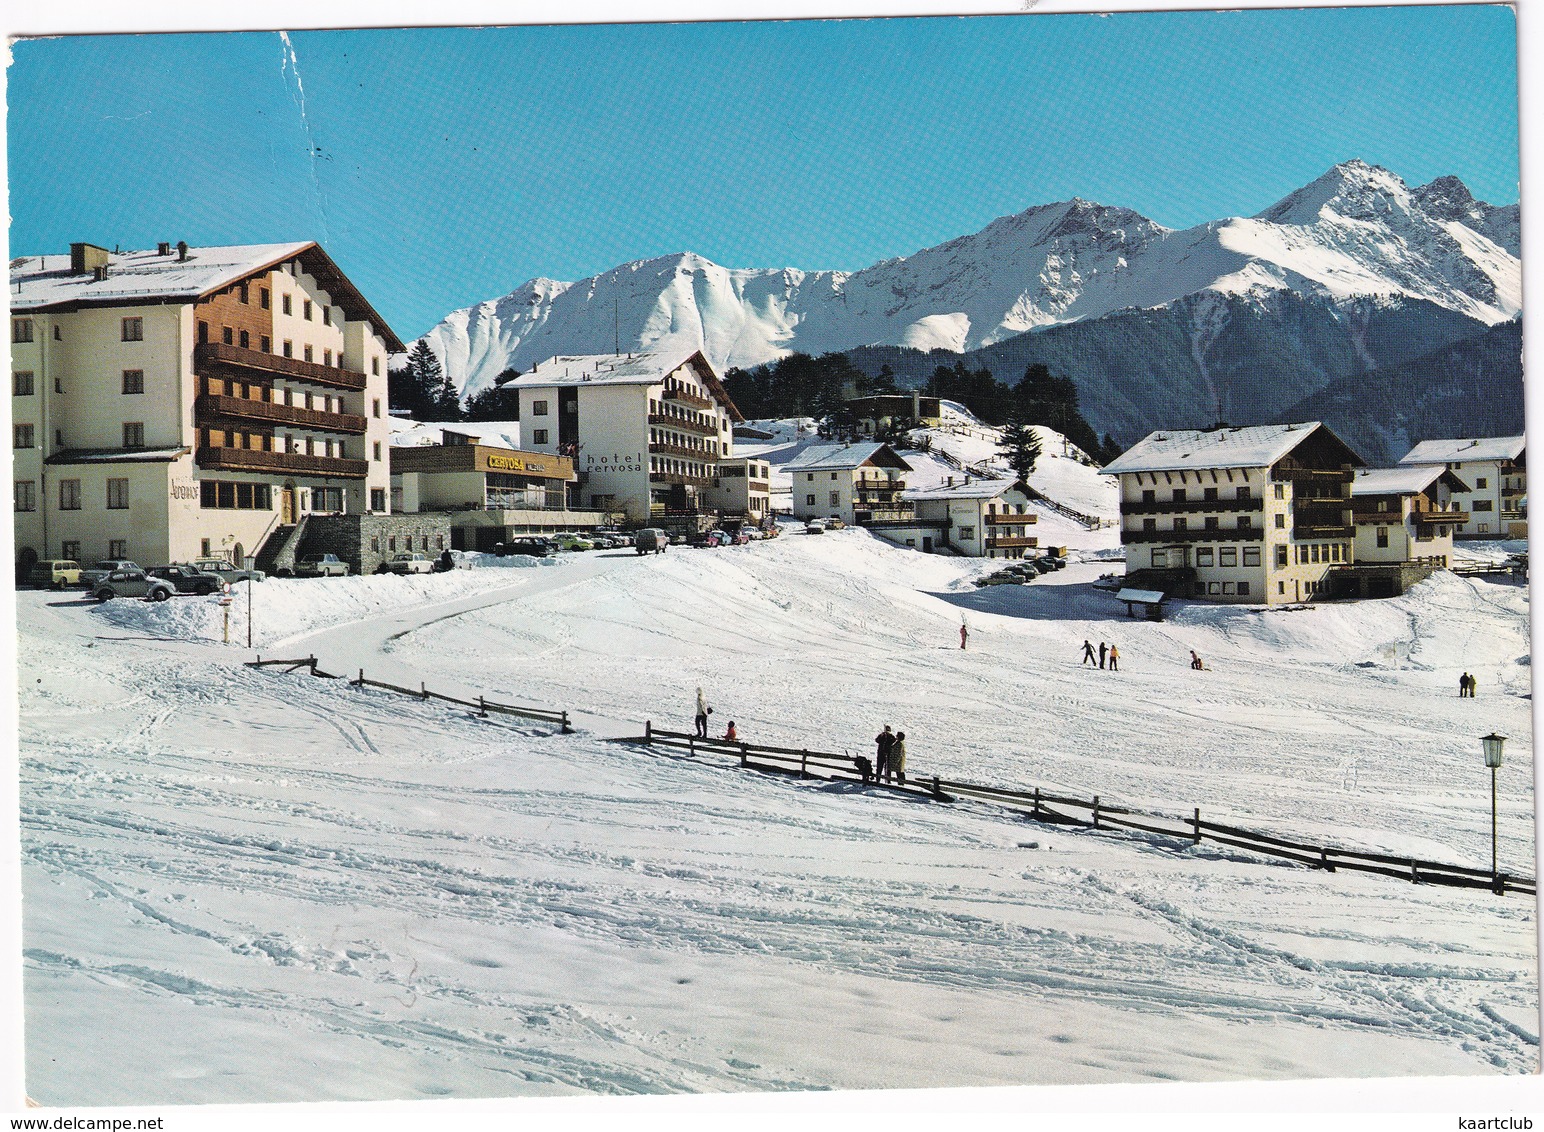 Serfaus, 1427 M - Hotel 'Cervosa' - Oberinntal, Tirol - (Austria) - Landeck